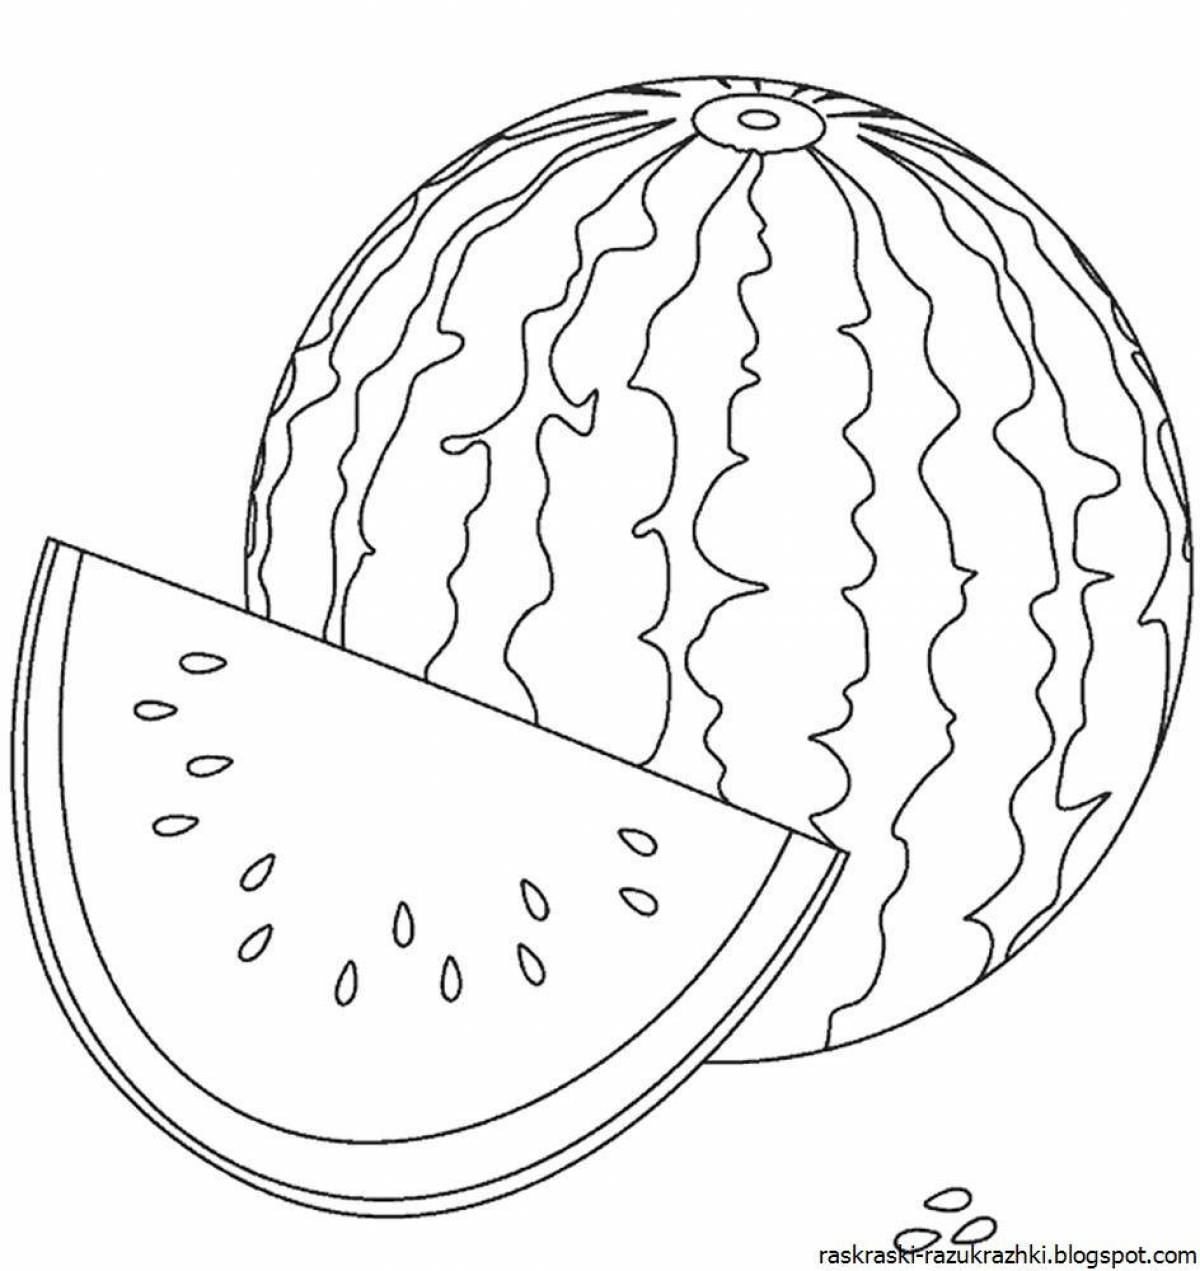 Fun watermelon coloring book for kids